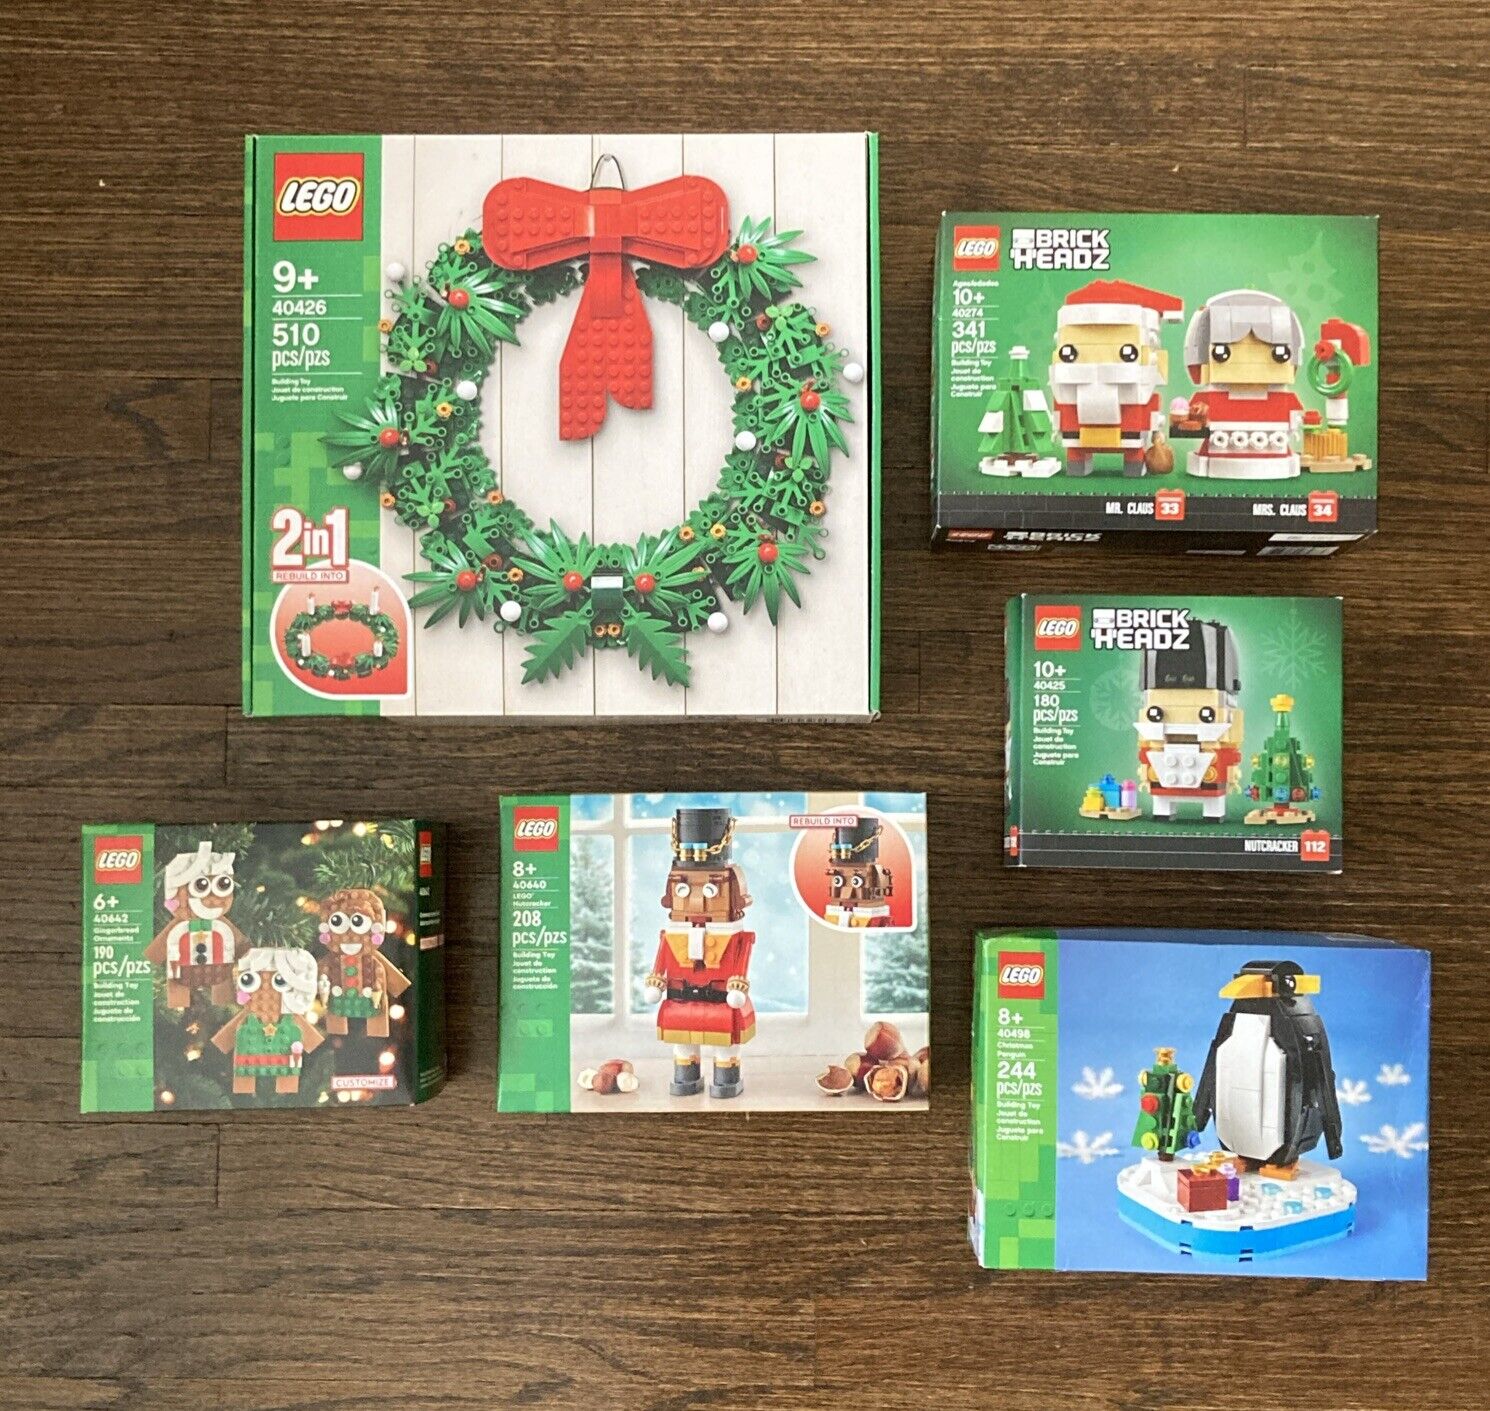 LOT! LEGO Christmas Sets 40428 Wreath, Gingerbread, Nutcracker, Brickheadz &More